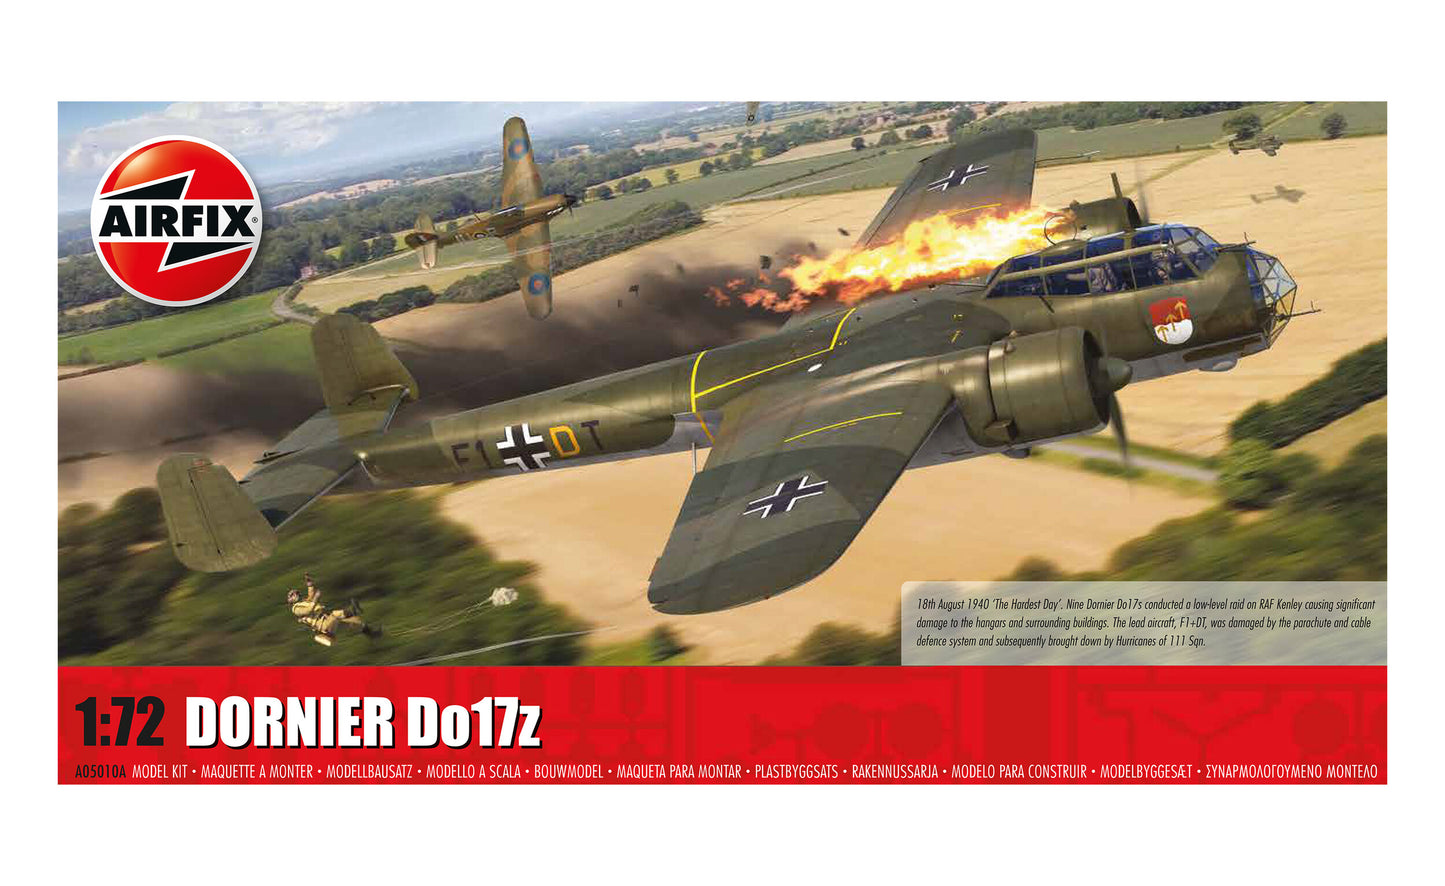 Airfix 1/72nd scale Dornier Do.17z